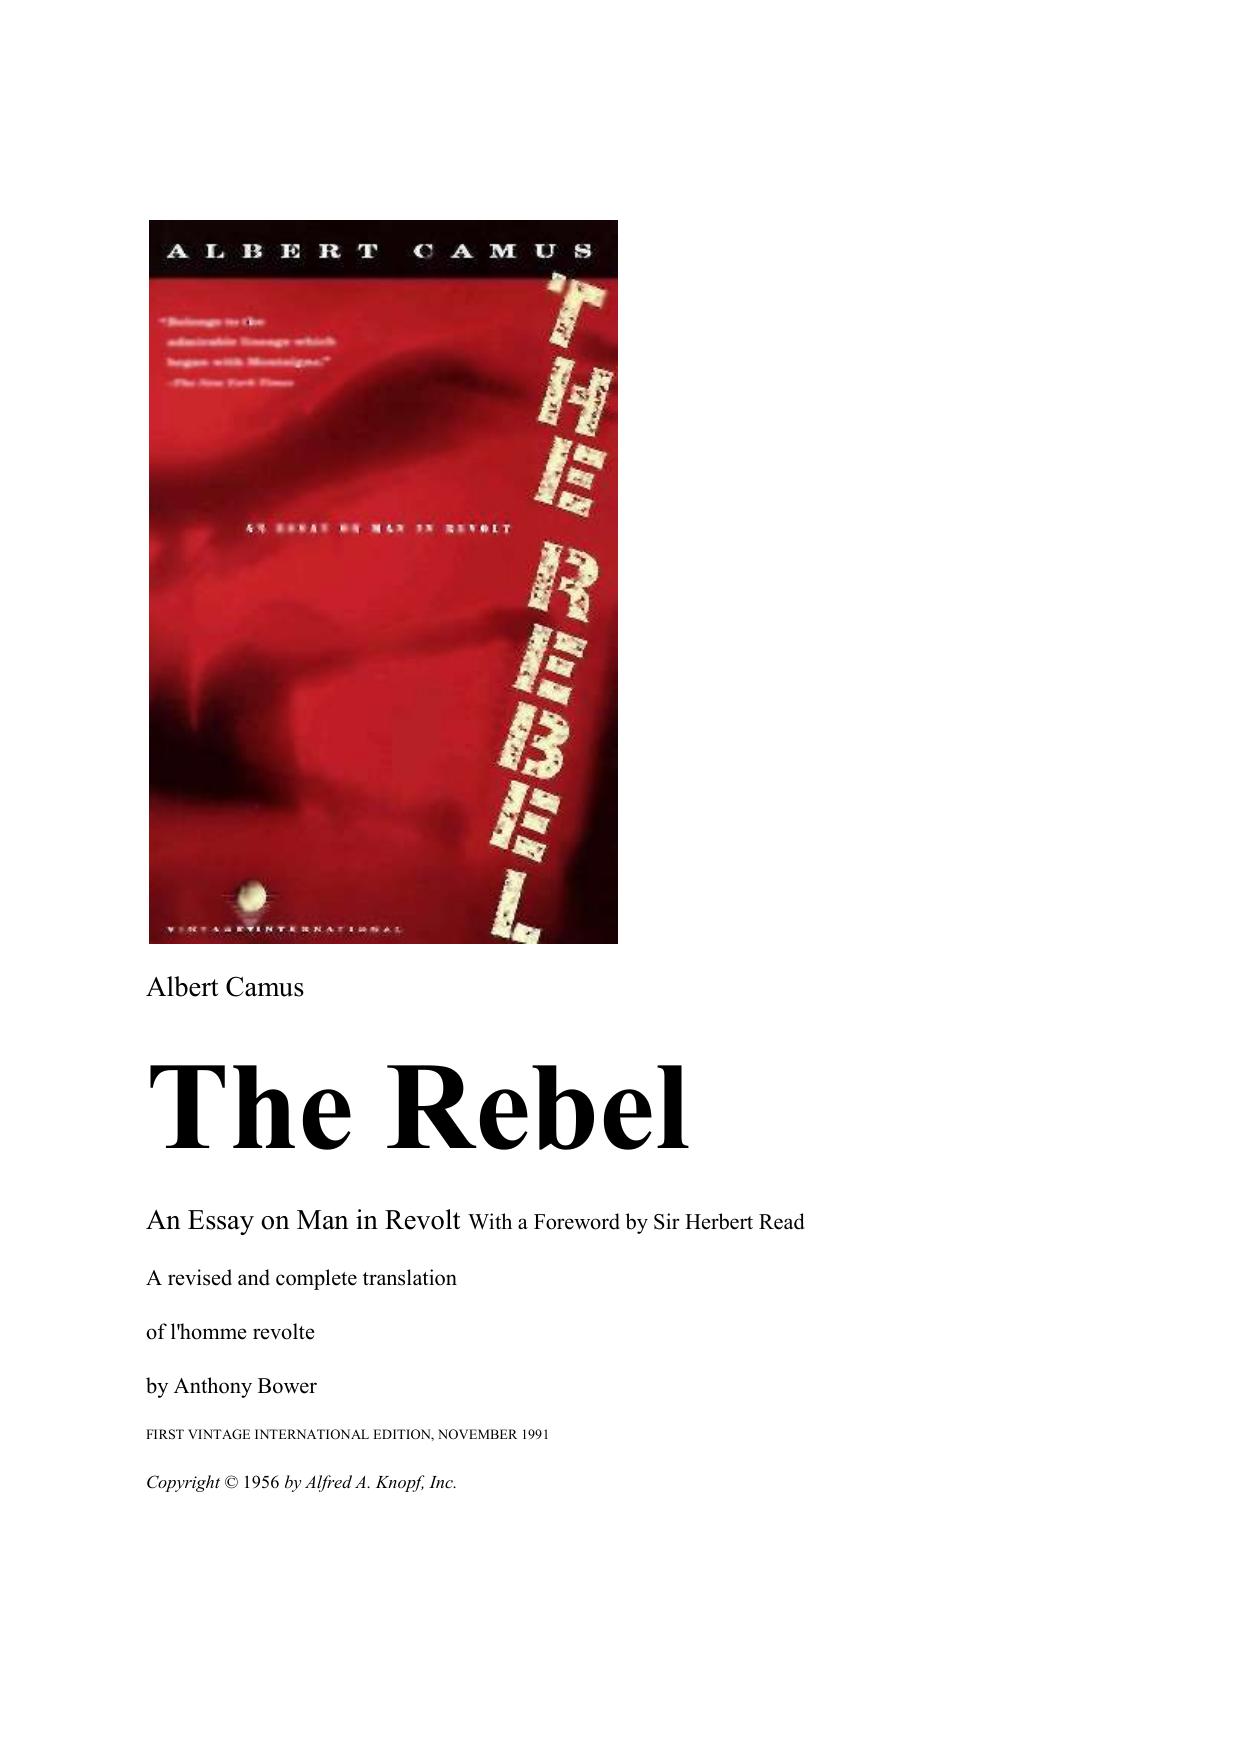 The Rebel: An Essay on Man in Revolt by Albert Camus